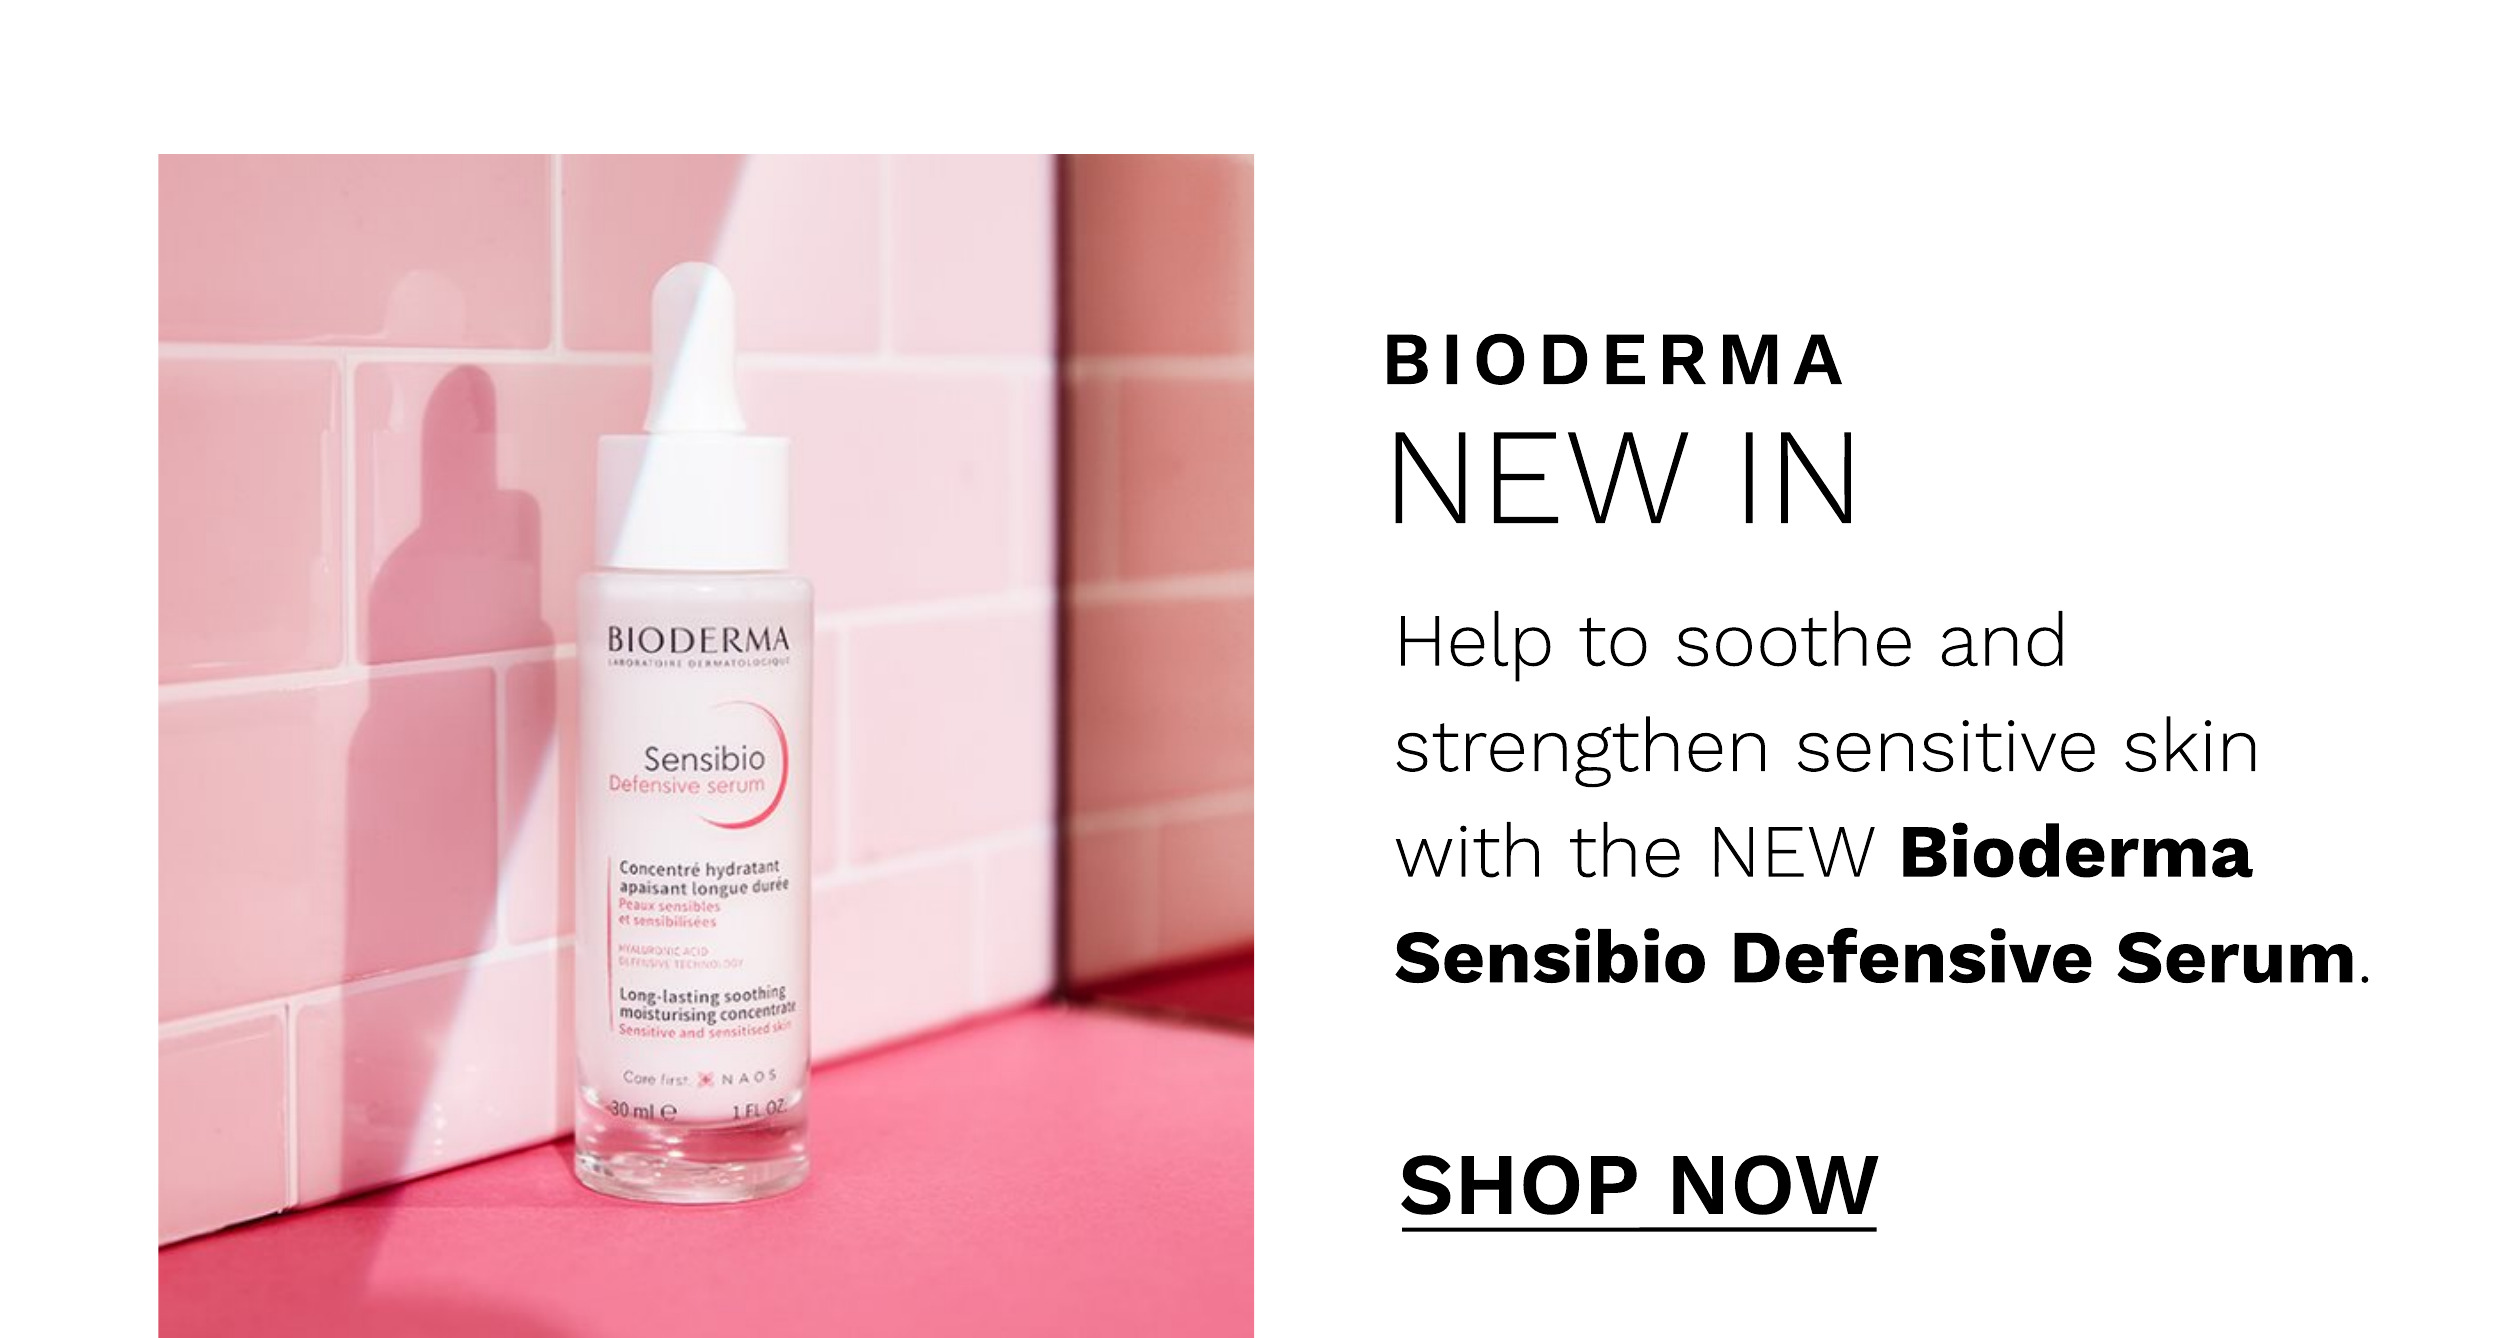 BIODERMA Sensibio BIODERMA NEW IN Help to soothe and strengthen sensitive skin with the NEW Bioderma Sensibio Defensive Serum. SHOP NOW 